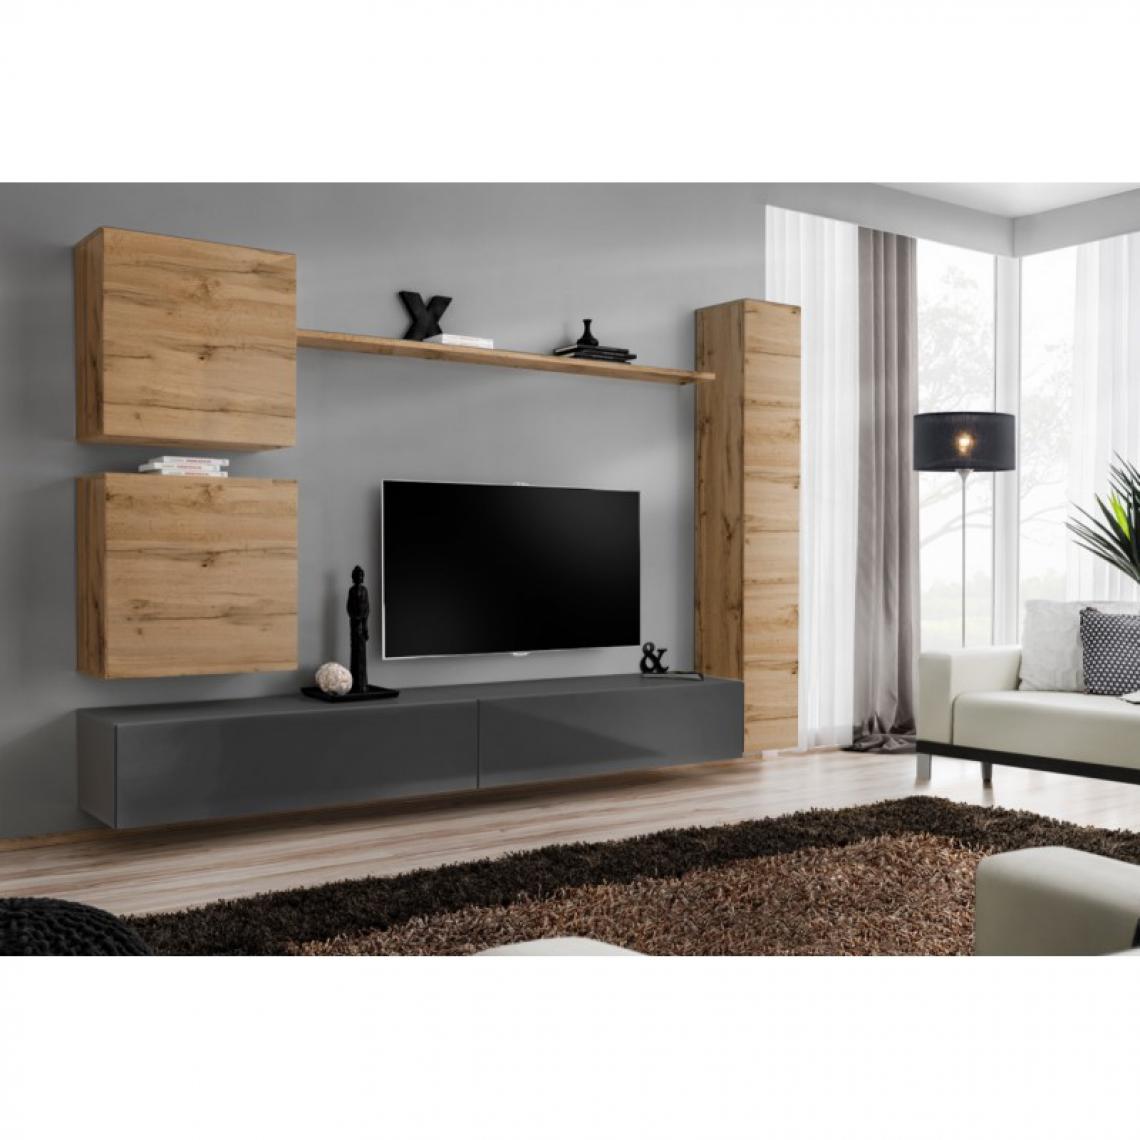 Ac-Deco - Meuble TV Mural Design Switch VIII 280cm Naturel & Gris - Meubles TV, Hi-Fi